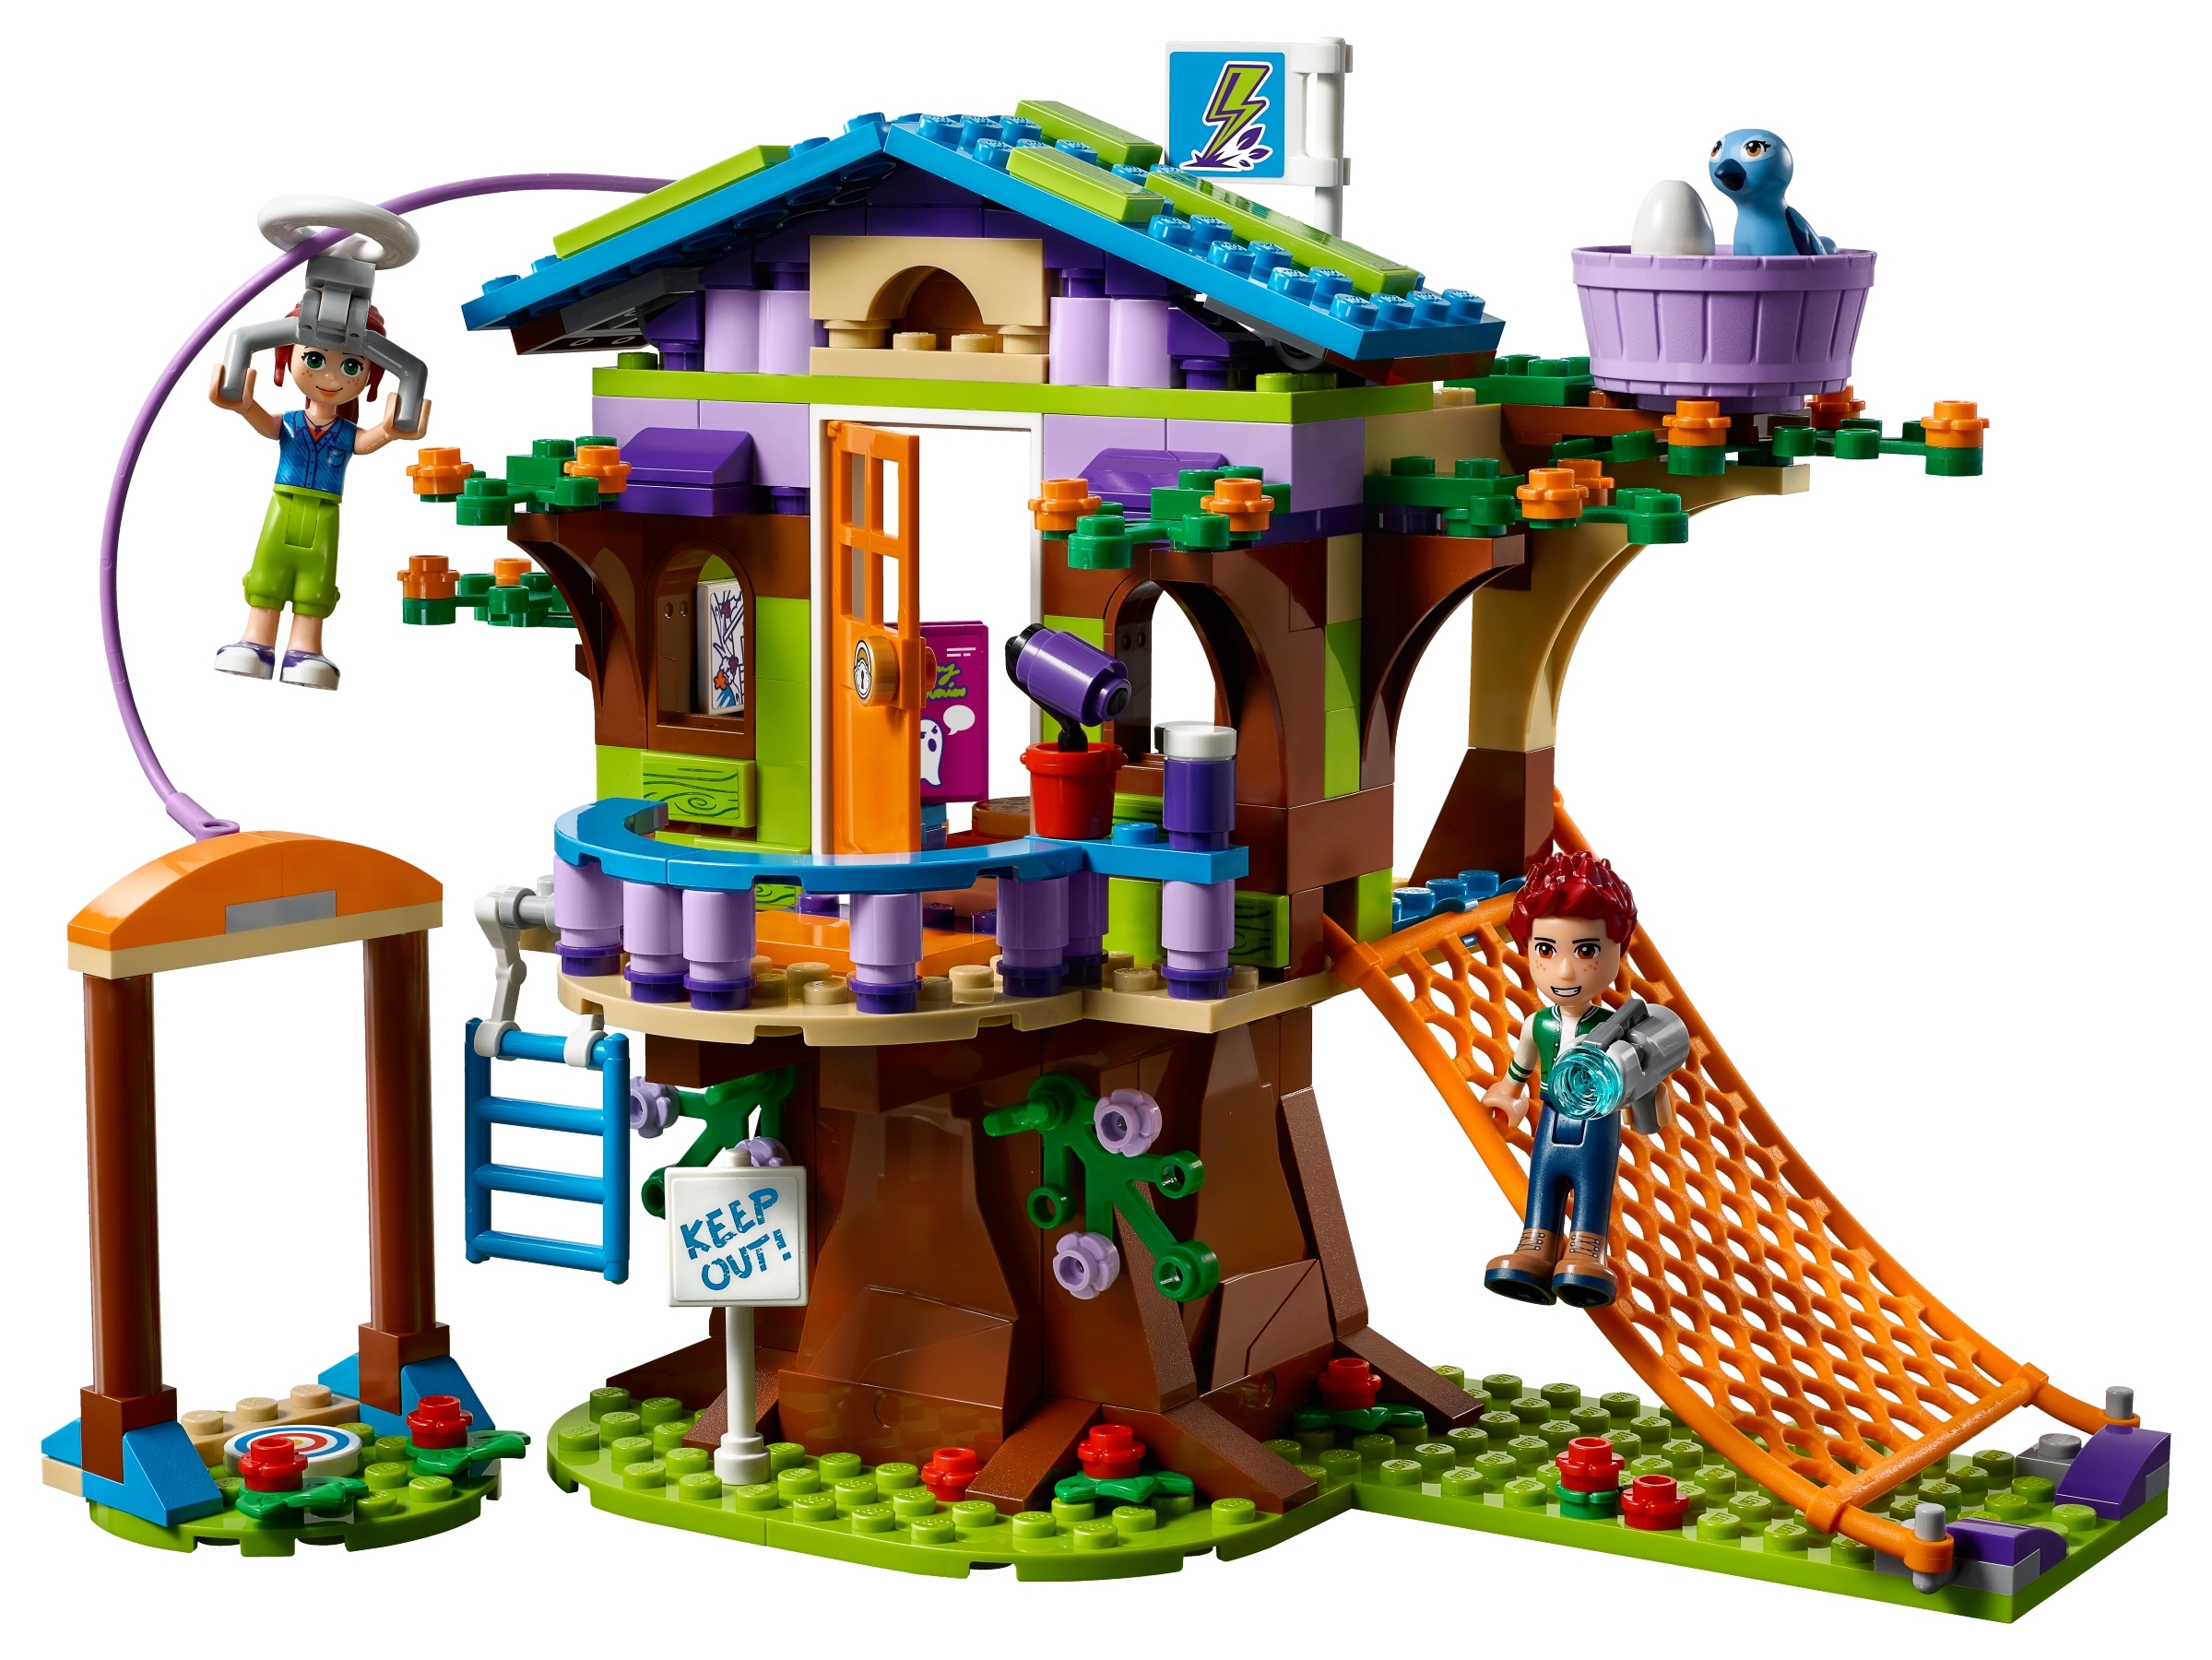 LEGO Friends Mia's Tree House Building Set - wide 6